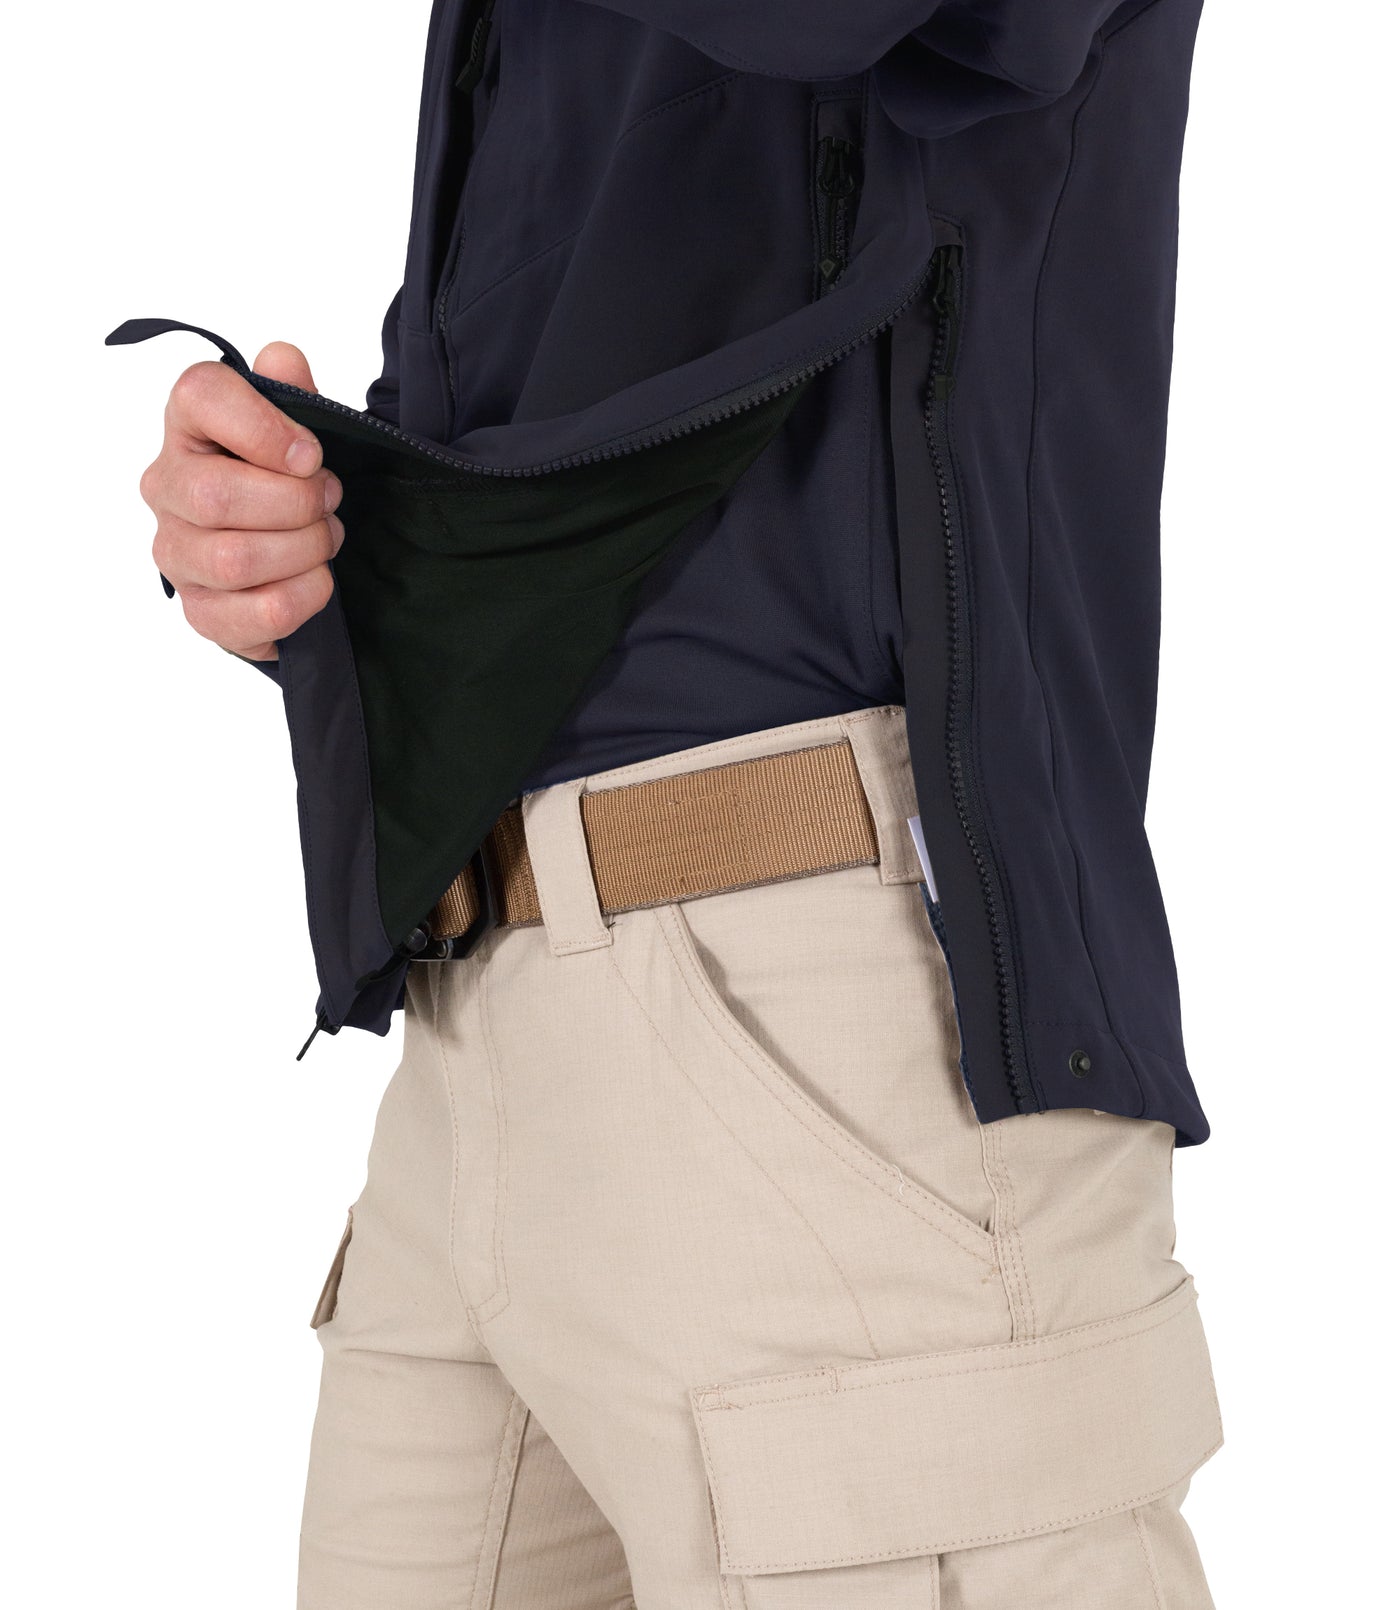 Men's Tactix Softshell Short Jacket